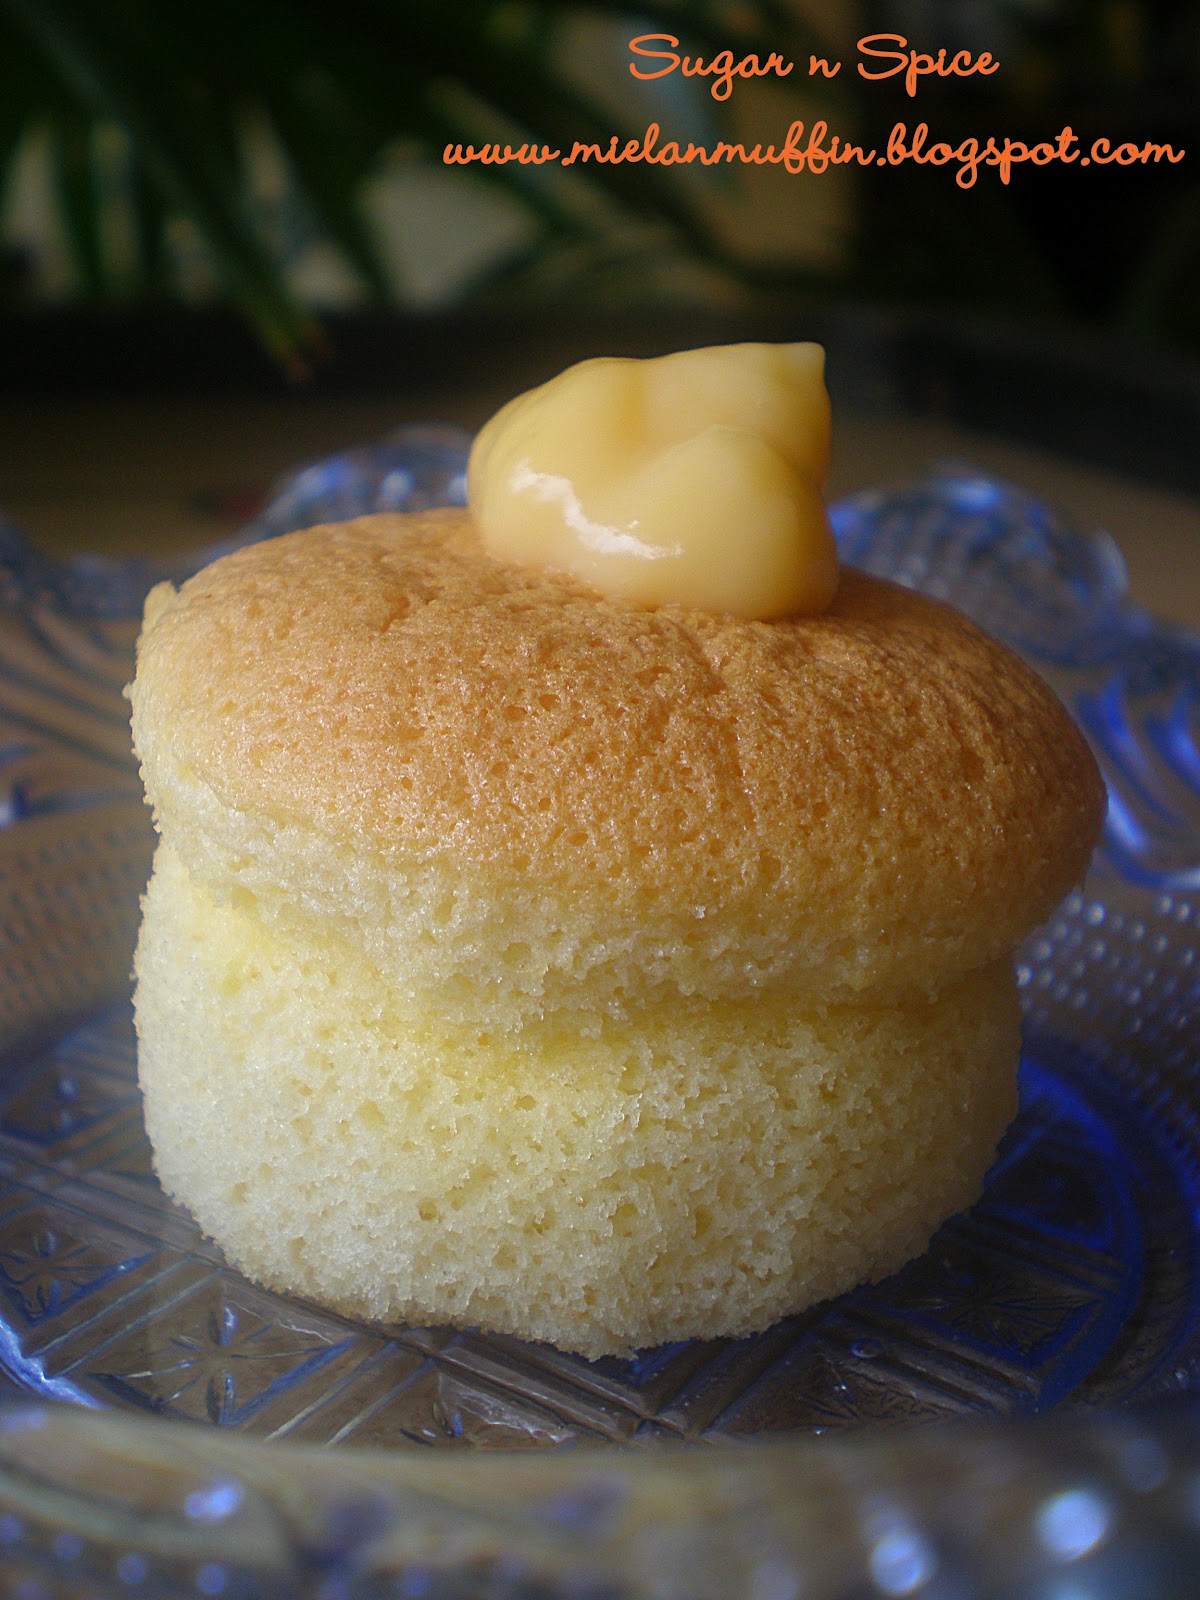 Sugar 'n' spice: Hokkaido Chiffon Cup Cake